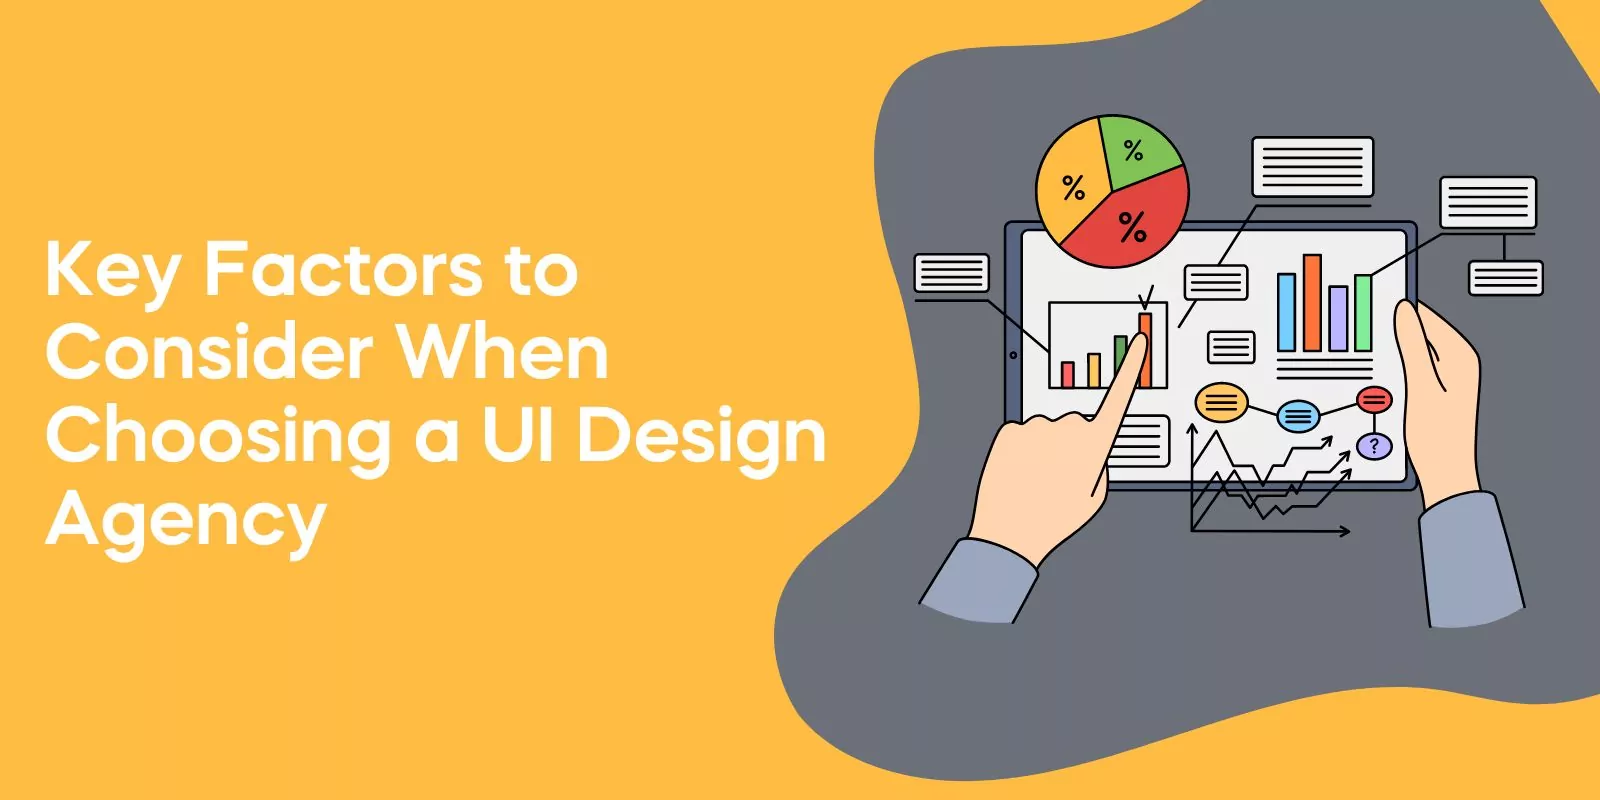 Key Factors to Consider When Choosing a UI Design Agency